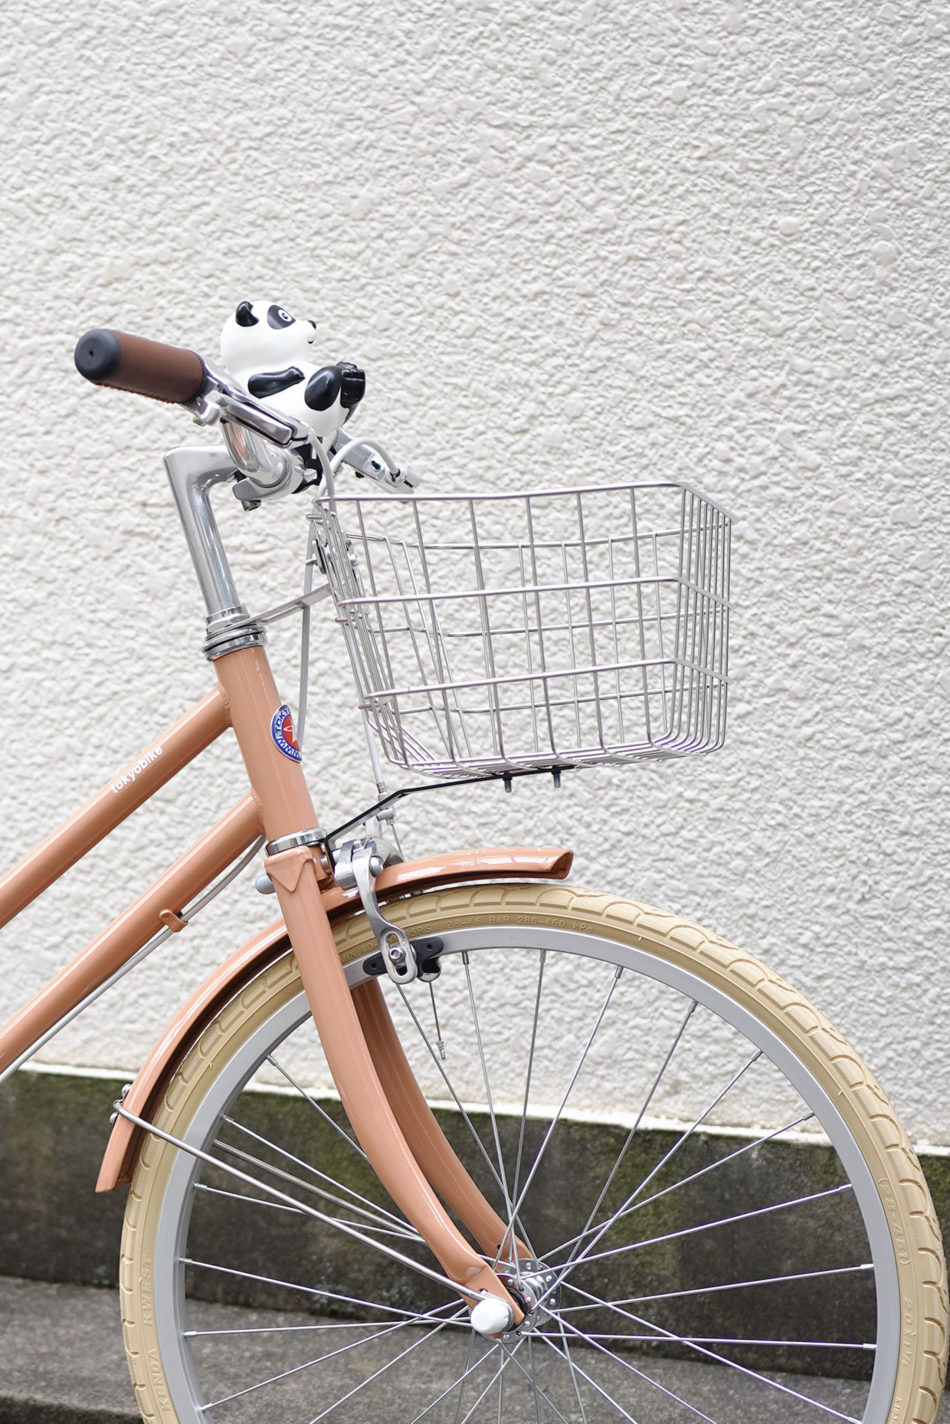 TOKYOBIKE Jr. Step ベージュレッドに子供用の自転車バスケットとパンダのアクセサリー